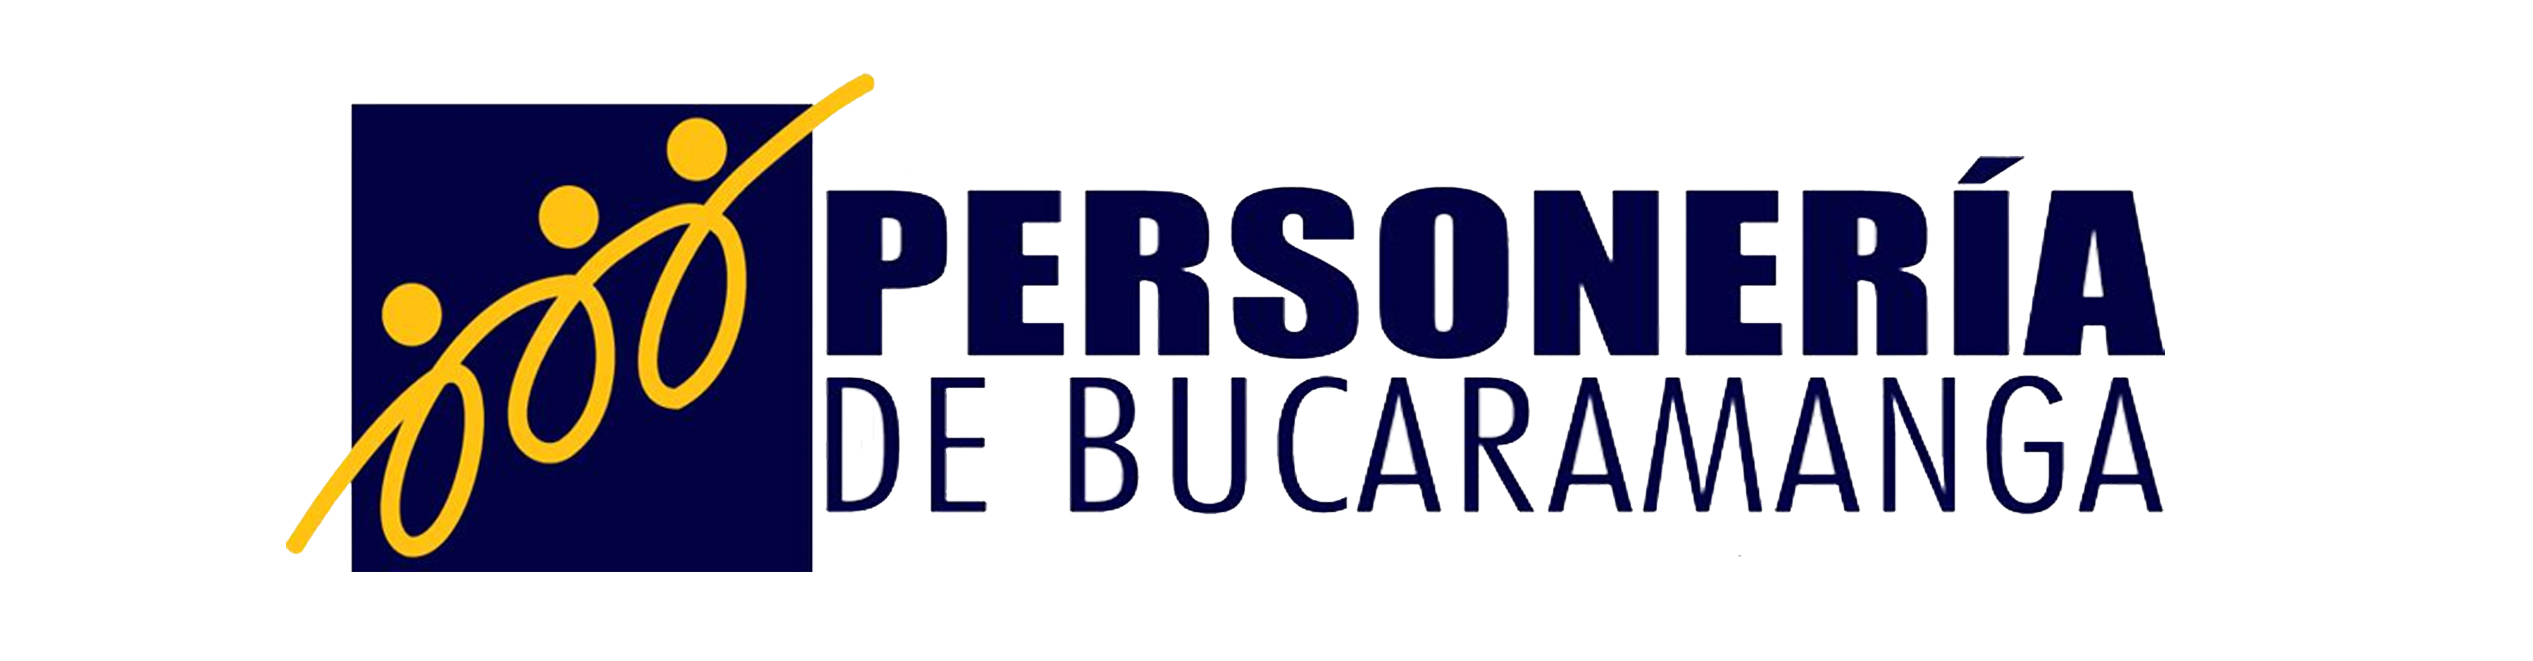 Personeria de Bucaramanga